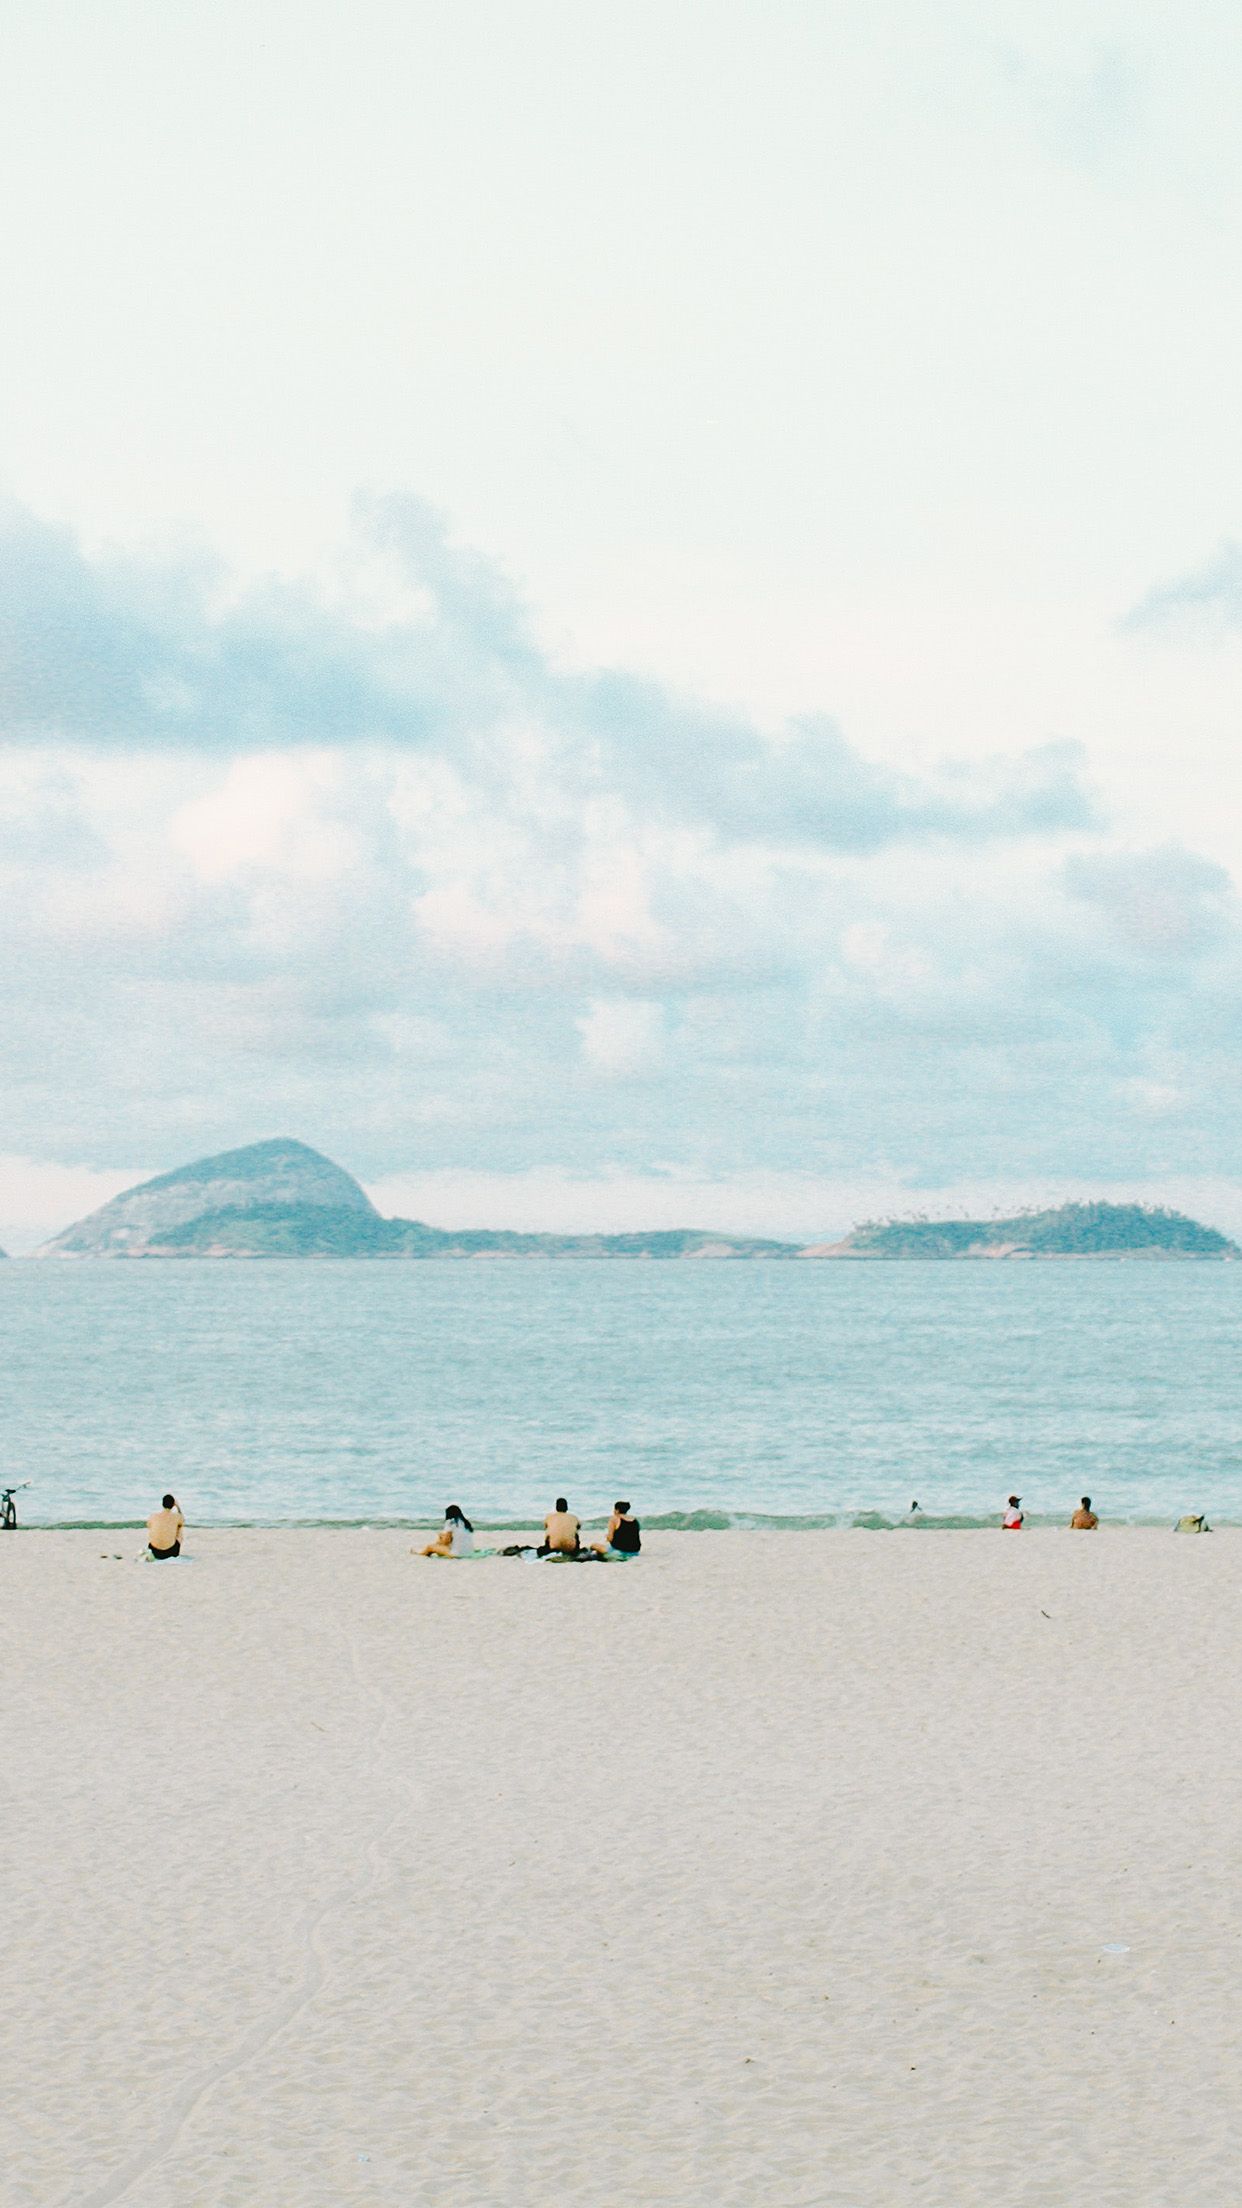 iPhone X wallpaper. beach holiday sea cloud island wave nature